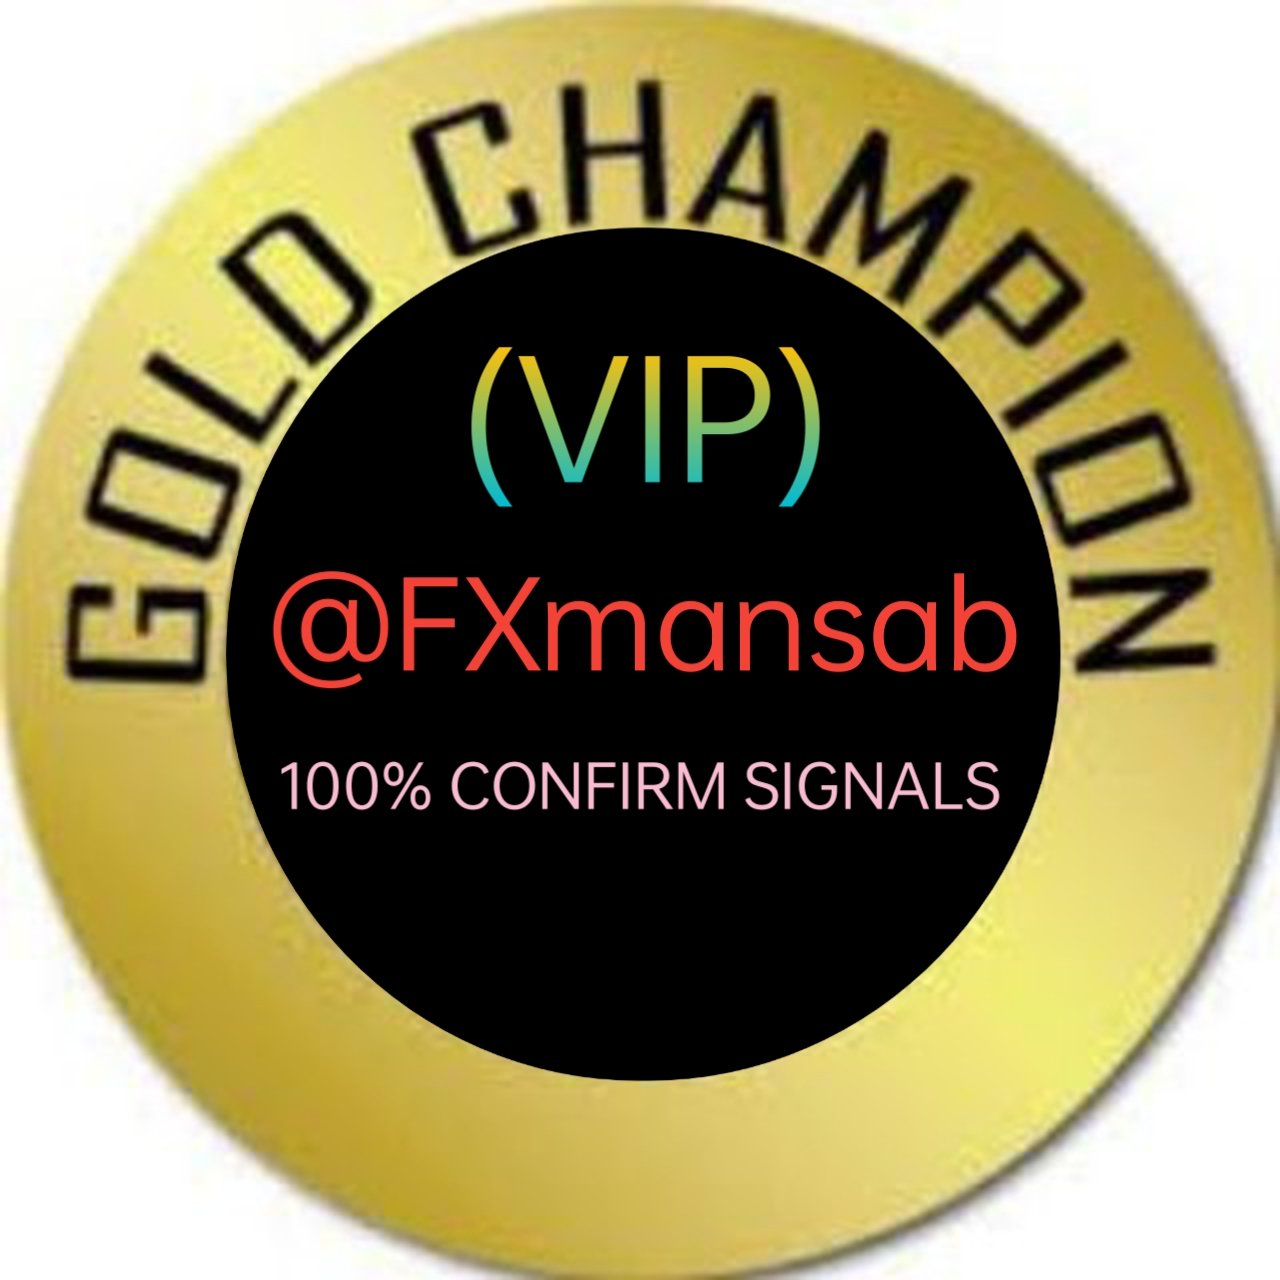 GOLD CHAMPION (VIP)